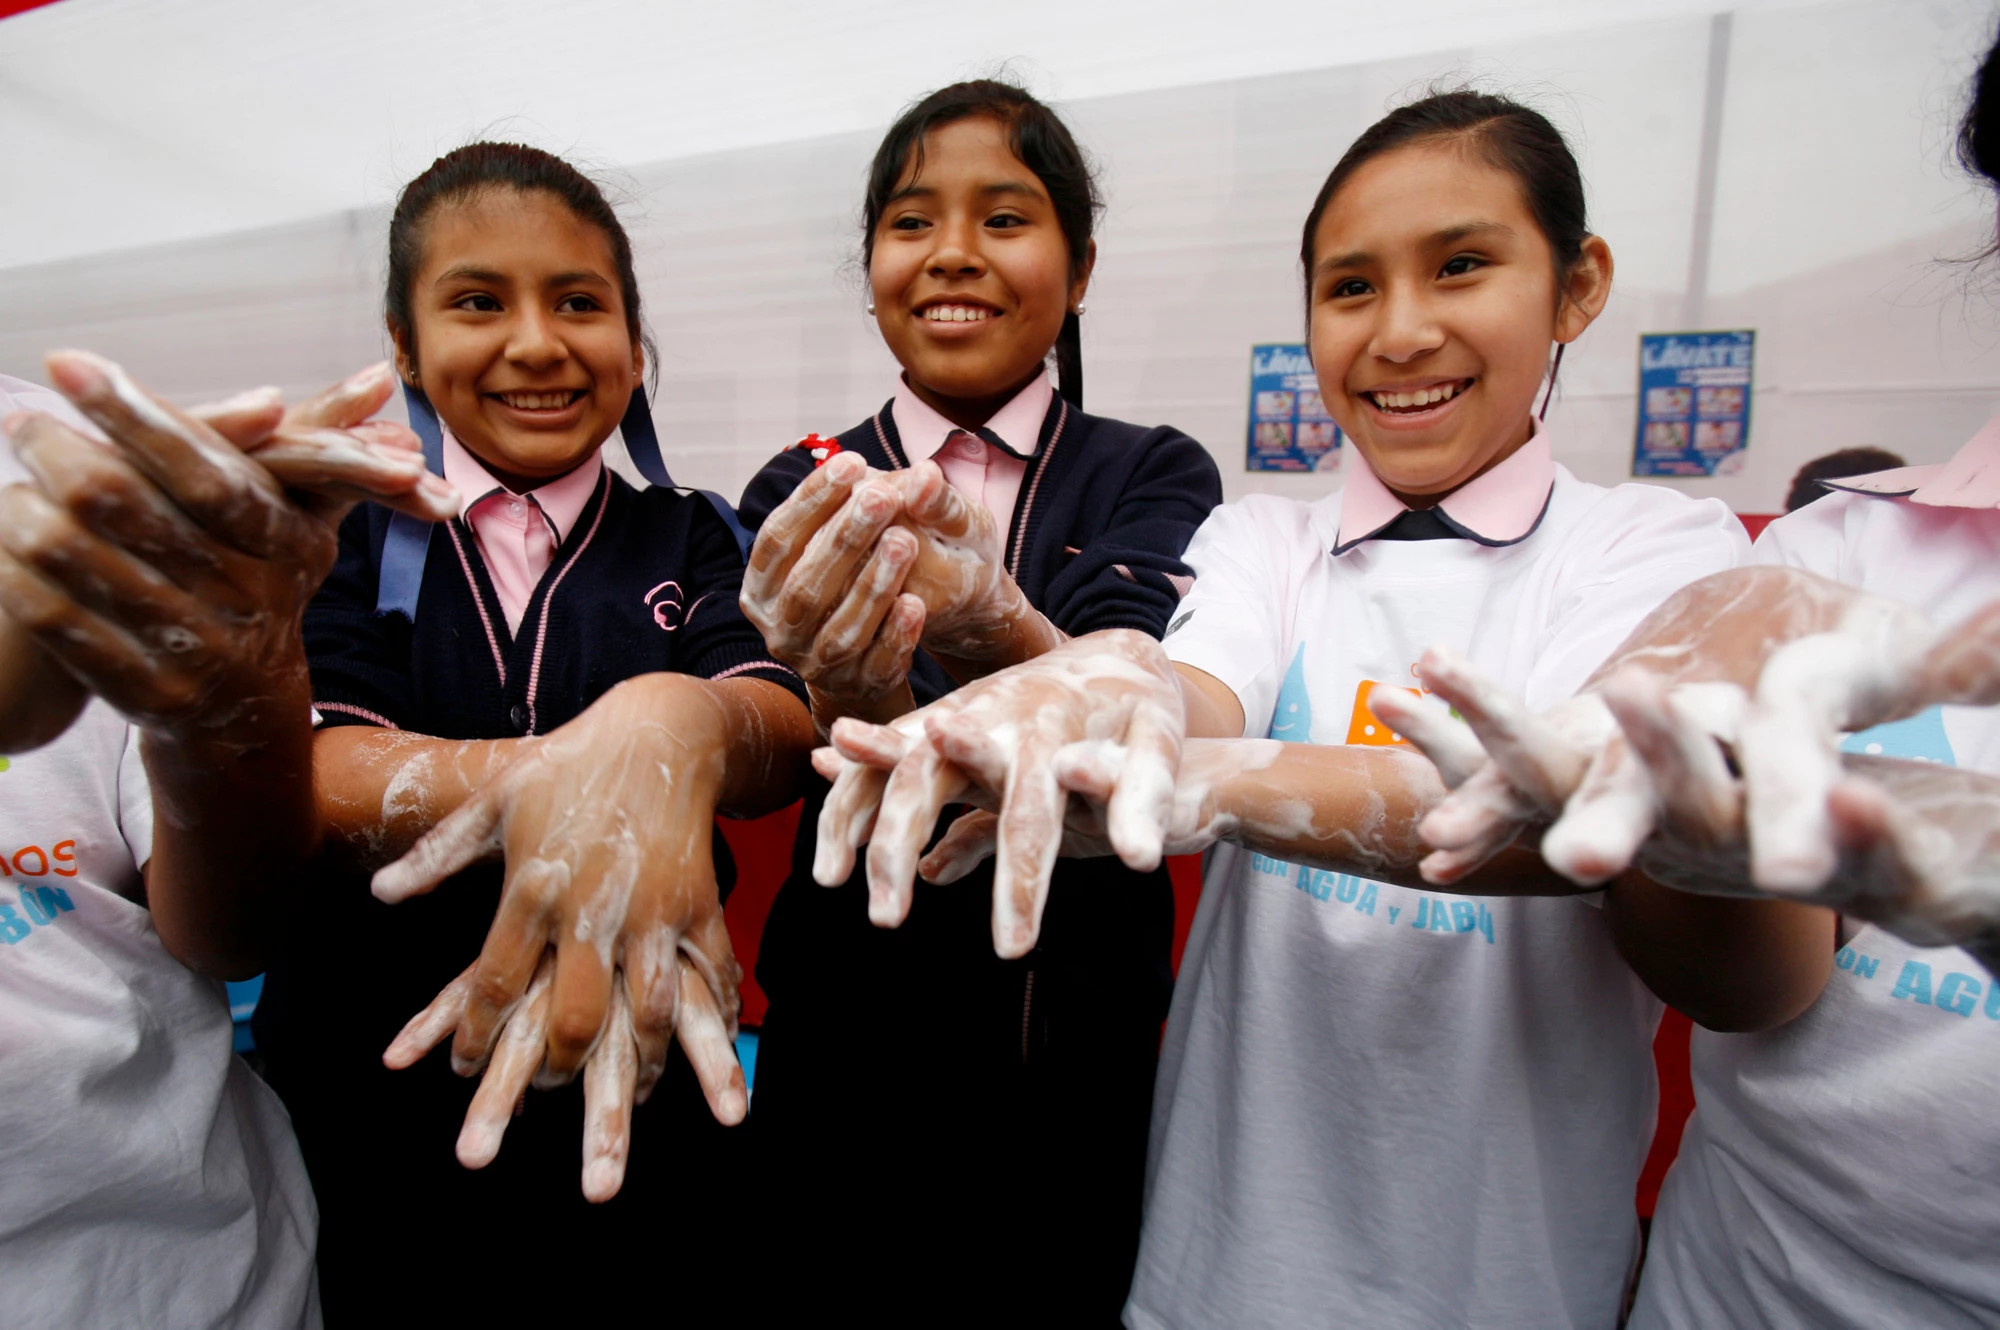 Hand-washing training in Peru 